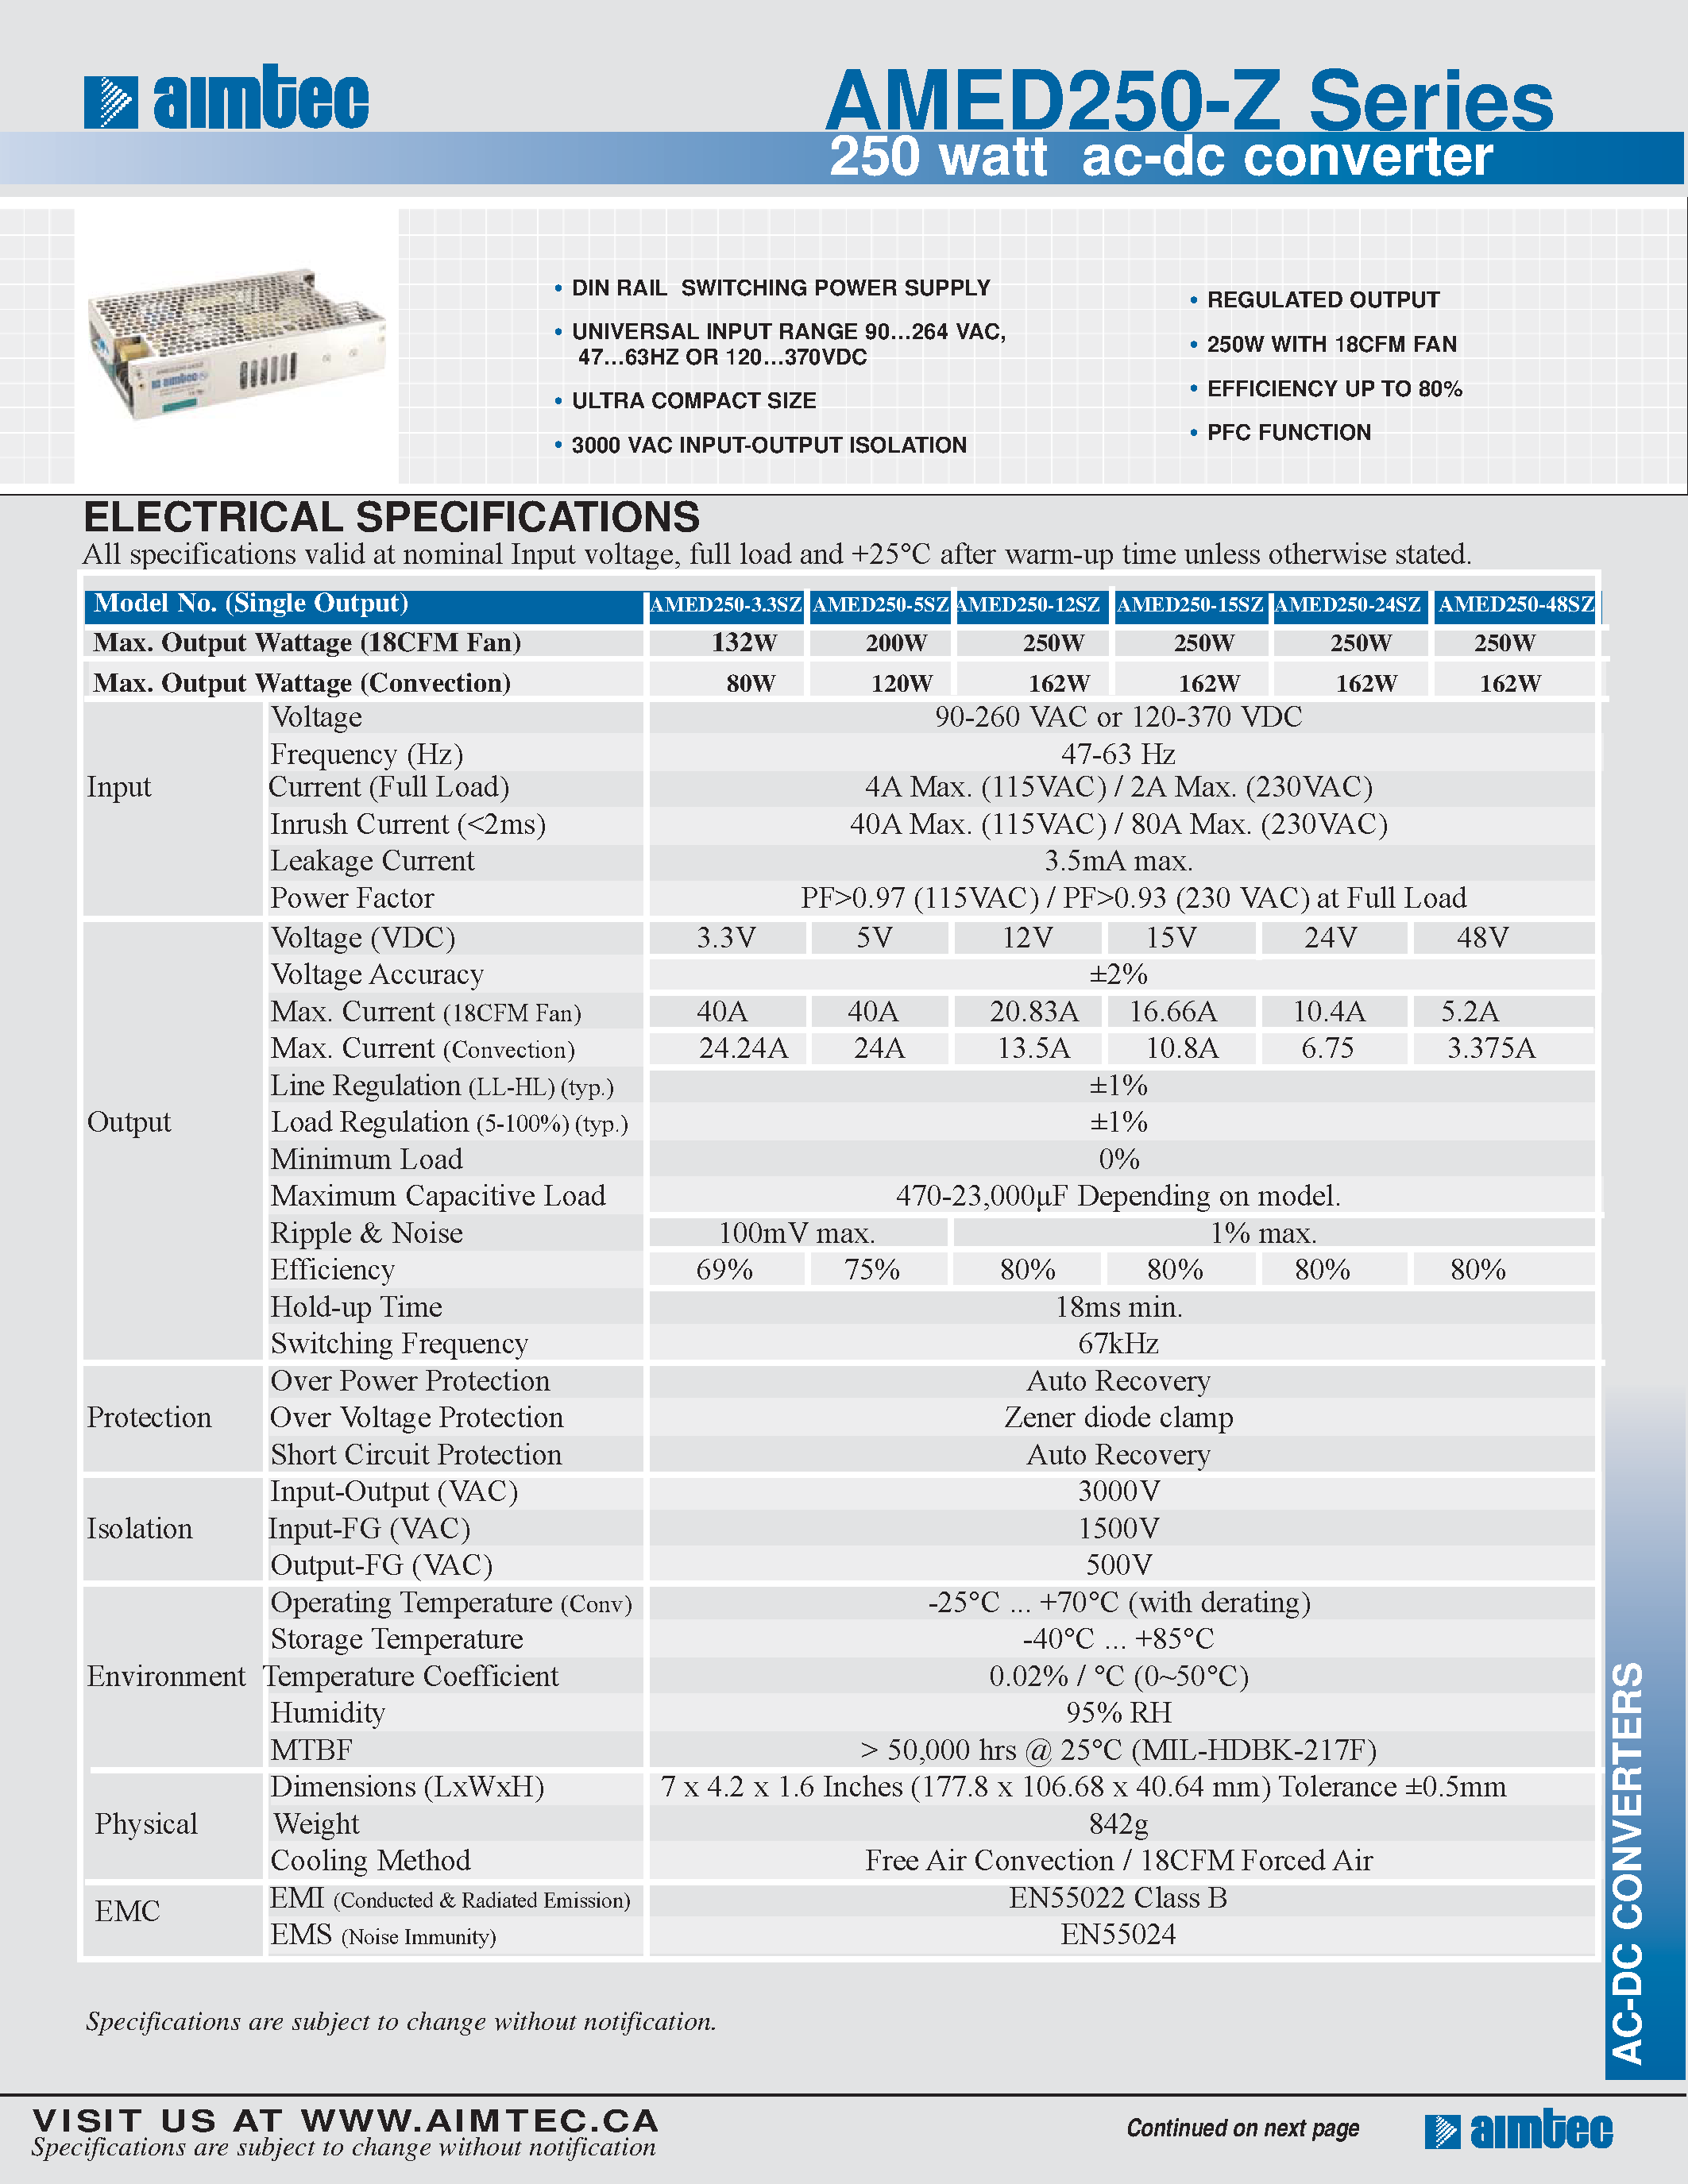 Datasheet AMED250-Z - 250 watt ac-dc converter page 1